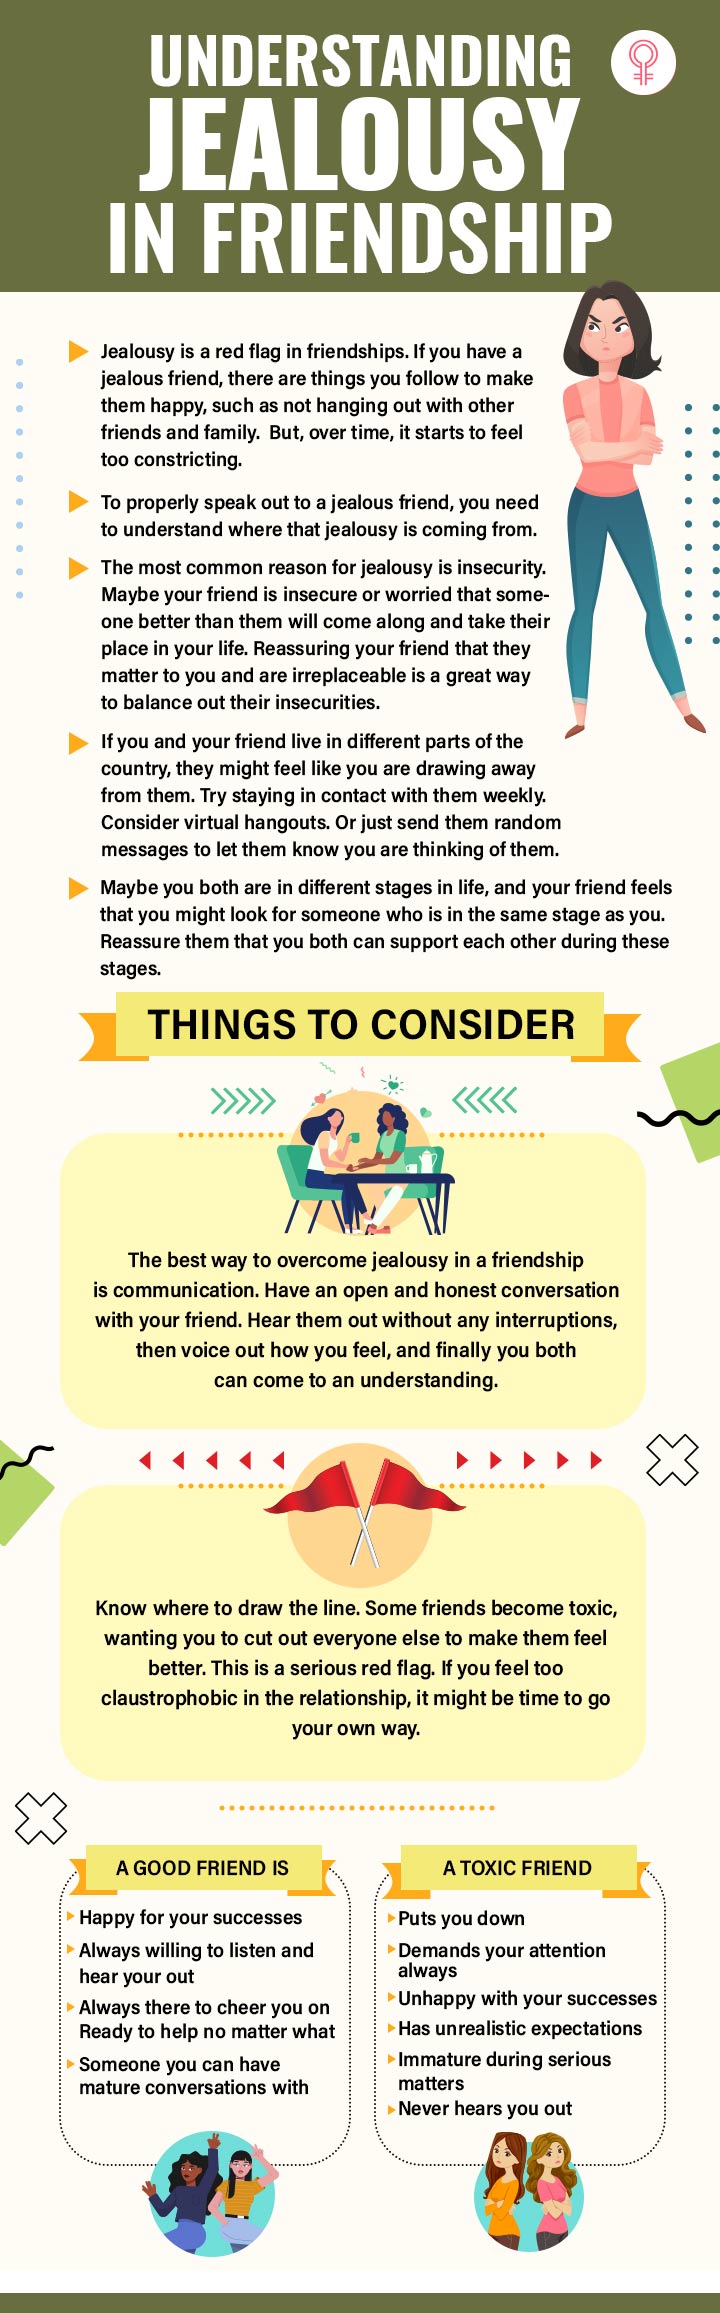 understanding jealousy in friendship [infographic]